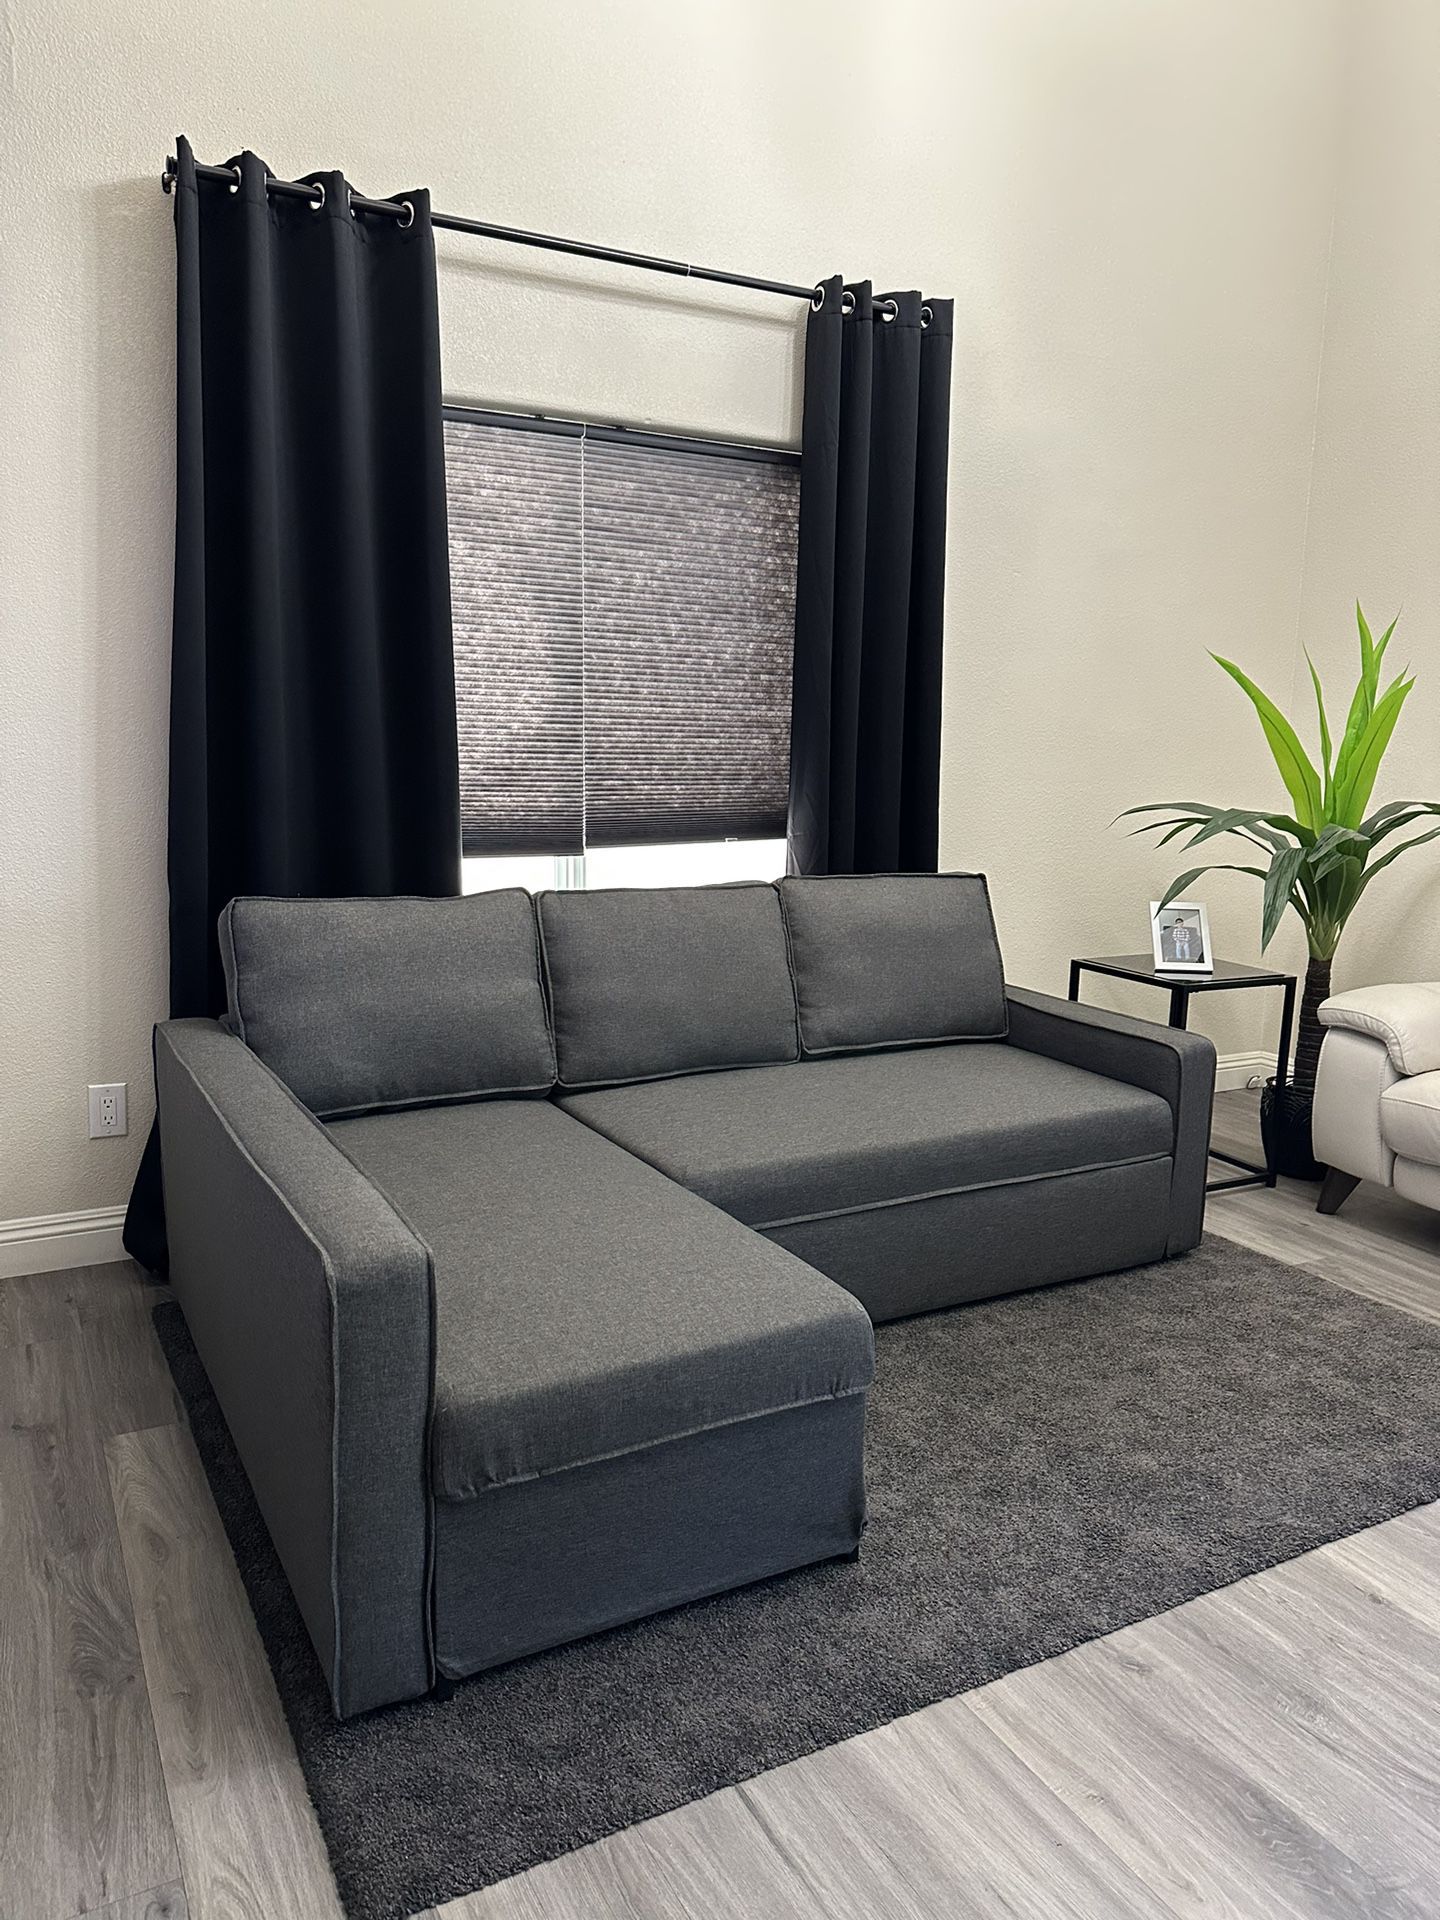 Modern Dark Grey Pop Up Sleeper Sofa Sectional Couch